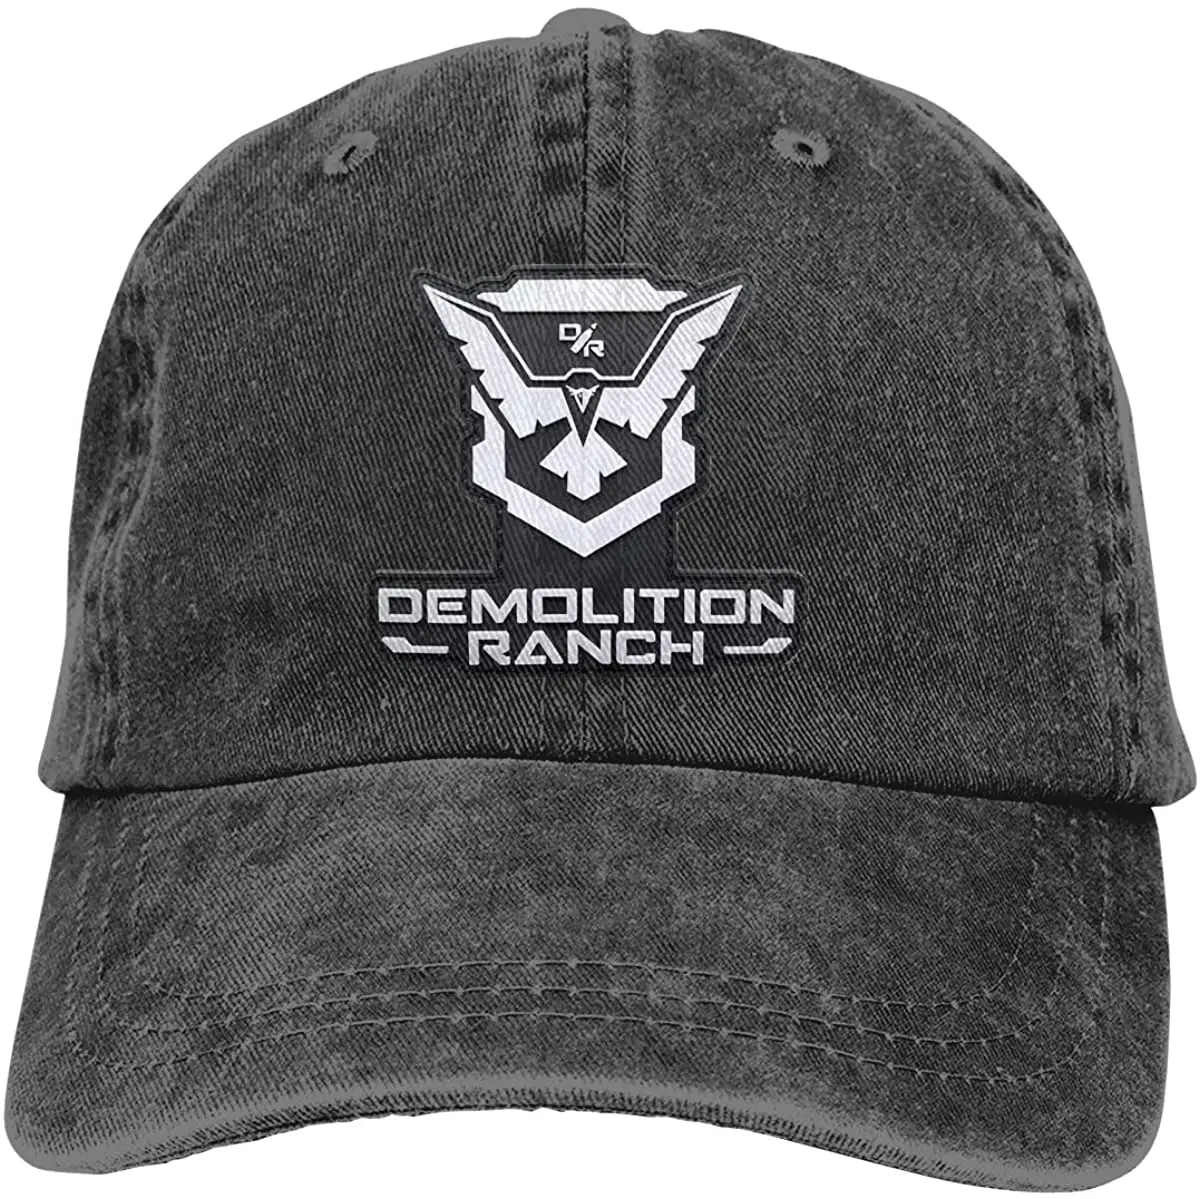 

Unisex Demolition Ranch Baseball Cap Golf Crowboy Hat Adjustable Classic Sports Trucker Hat Adult Hat Black